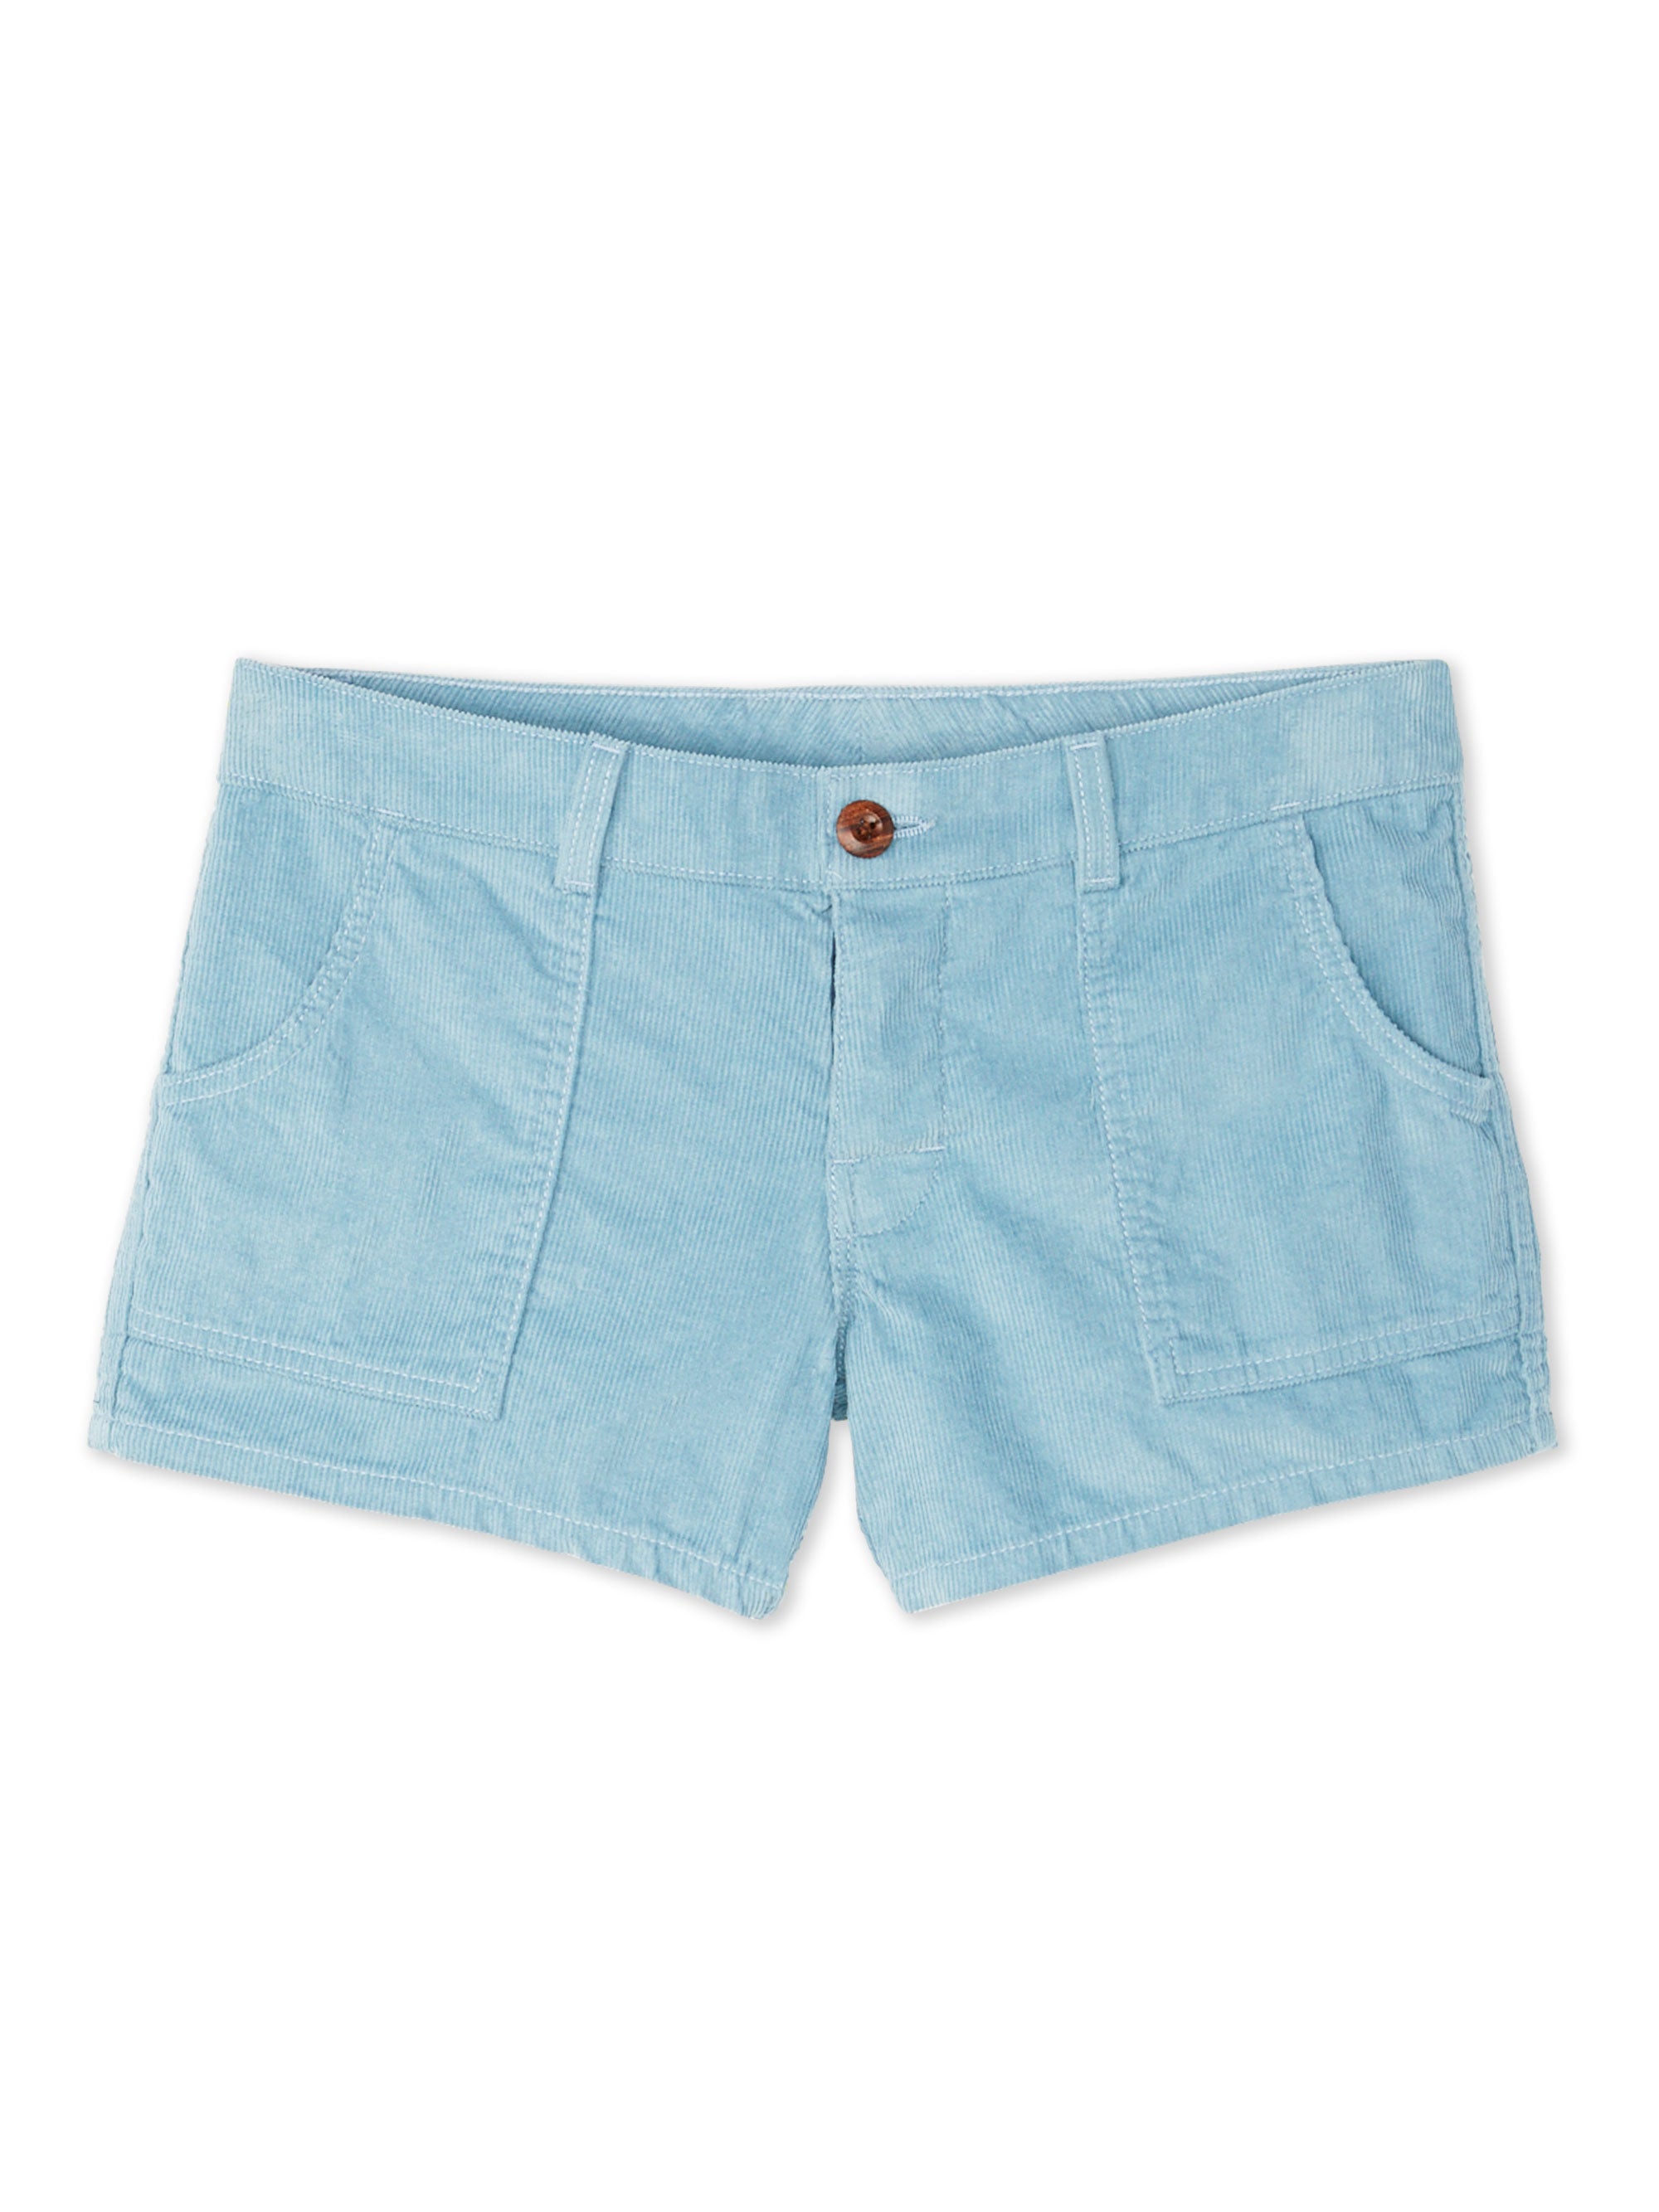 Corduroy Shorts - Light Blue | Birdwell Beach Britches